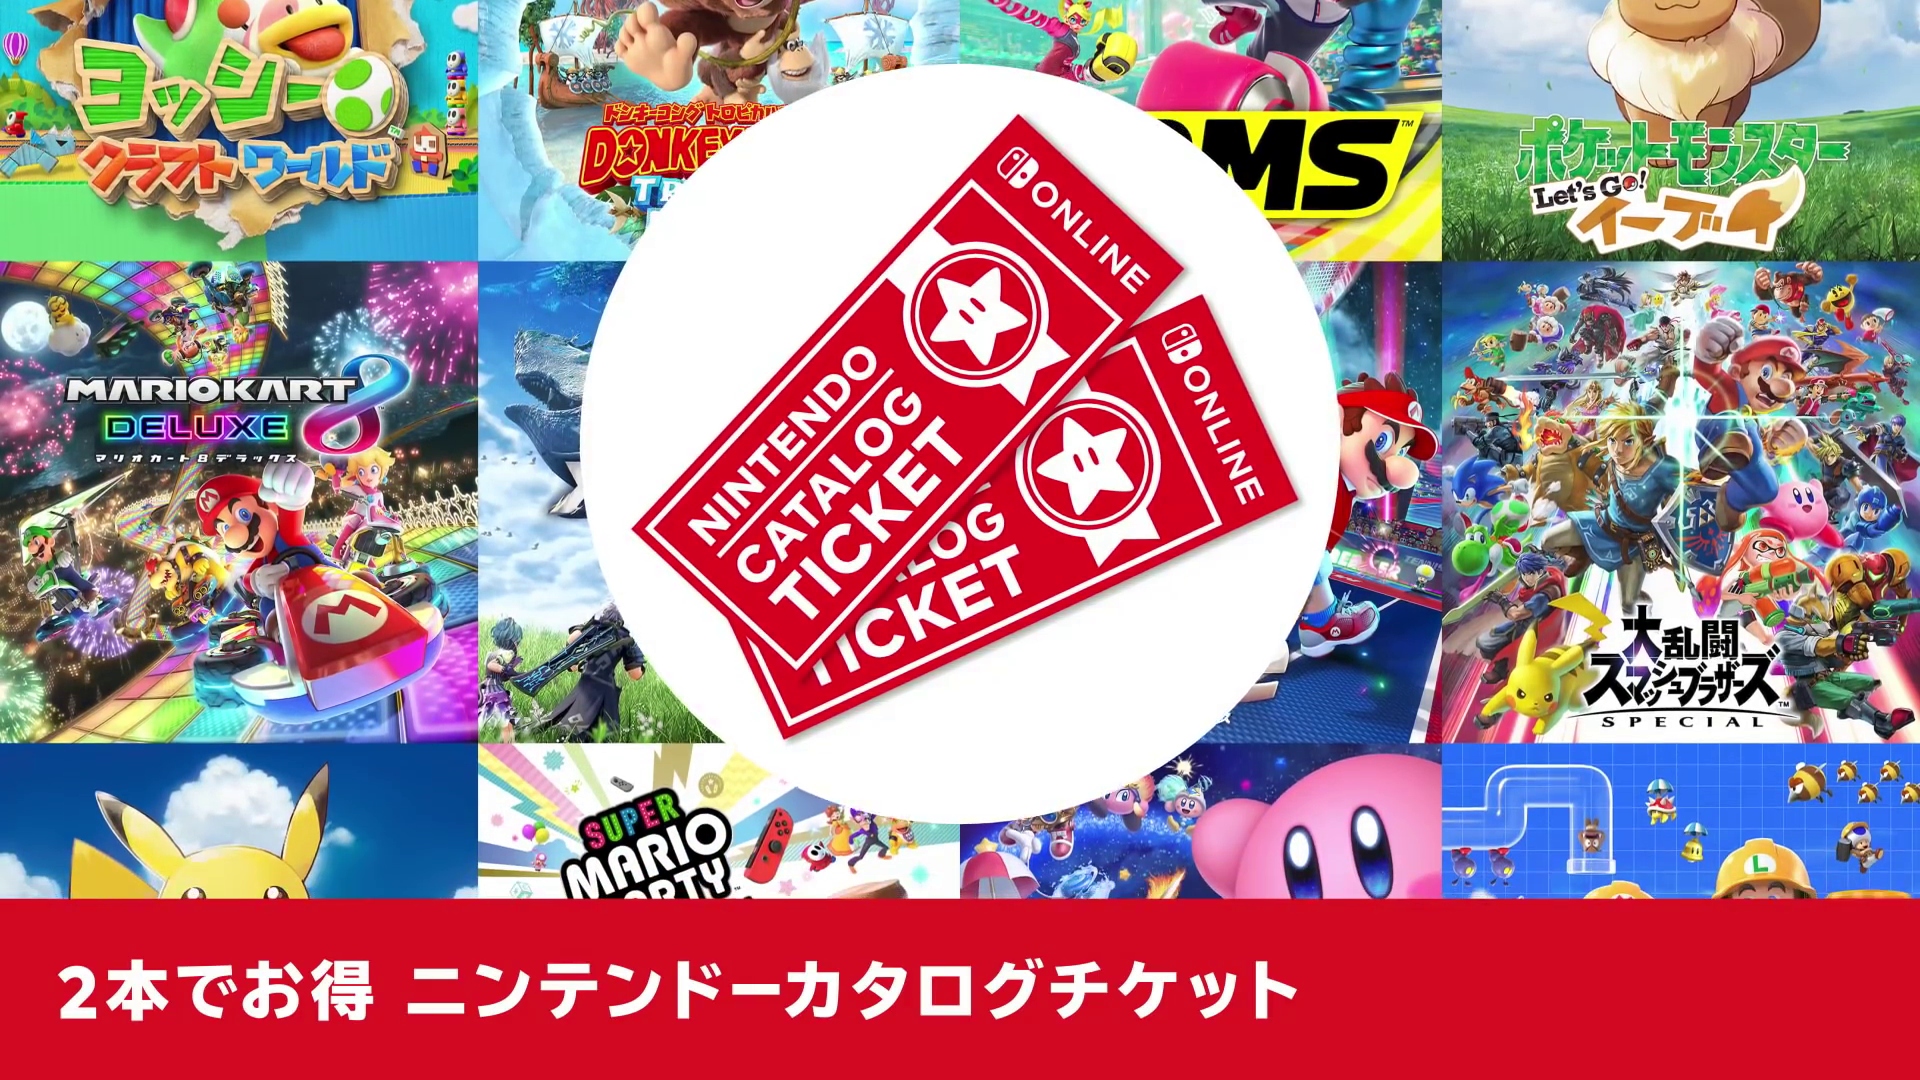 Nintendo Switchの対象ゲーム2本が9980円で購入できるオンライン加入者 ...